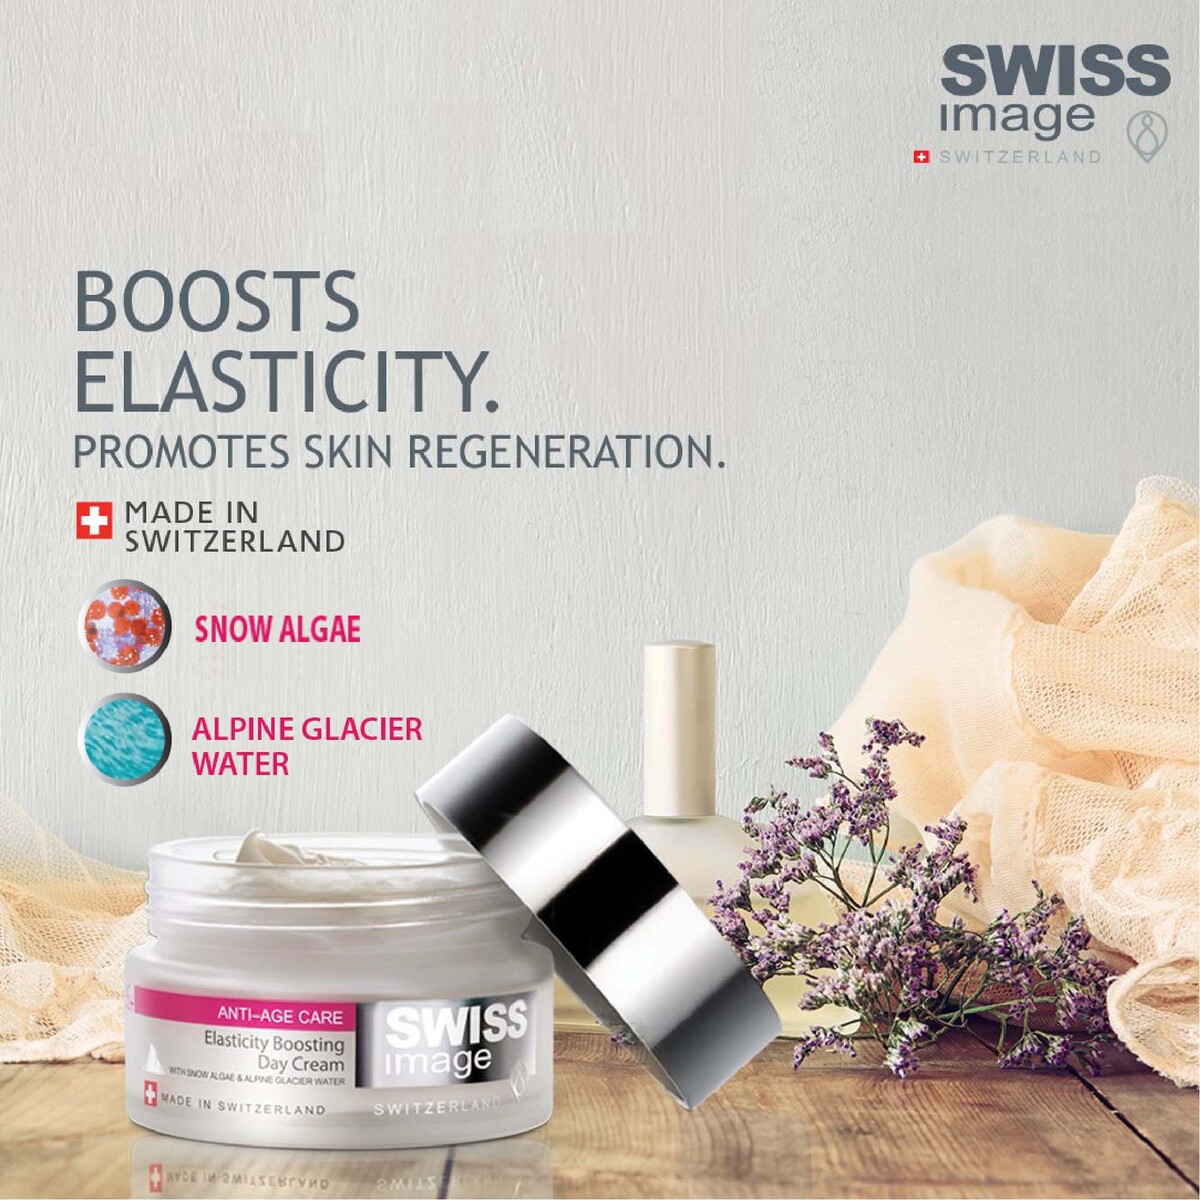 Swiss Image Anti-Age Care, 36+ Elasticity Boosting Day Cream, 50 ml